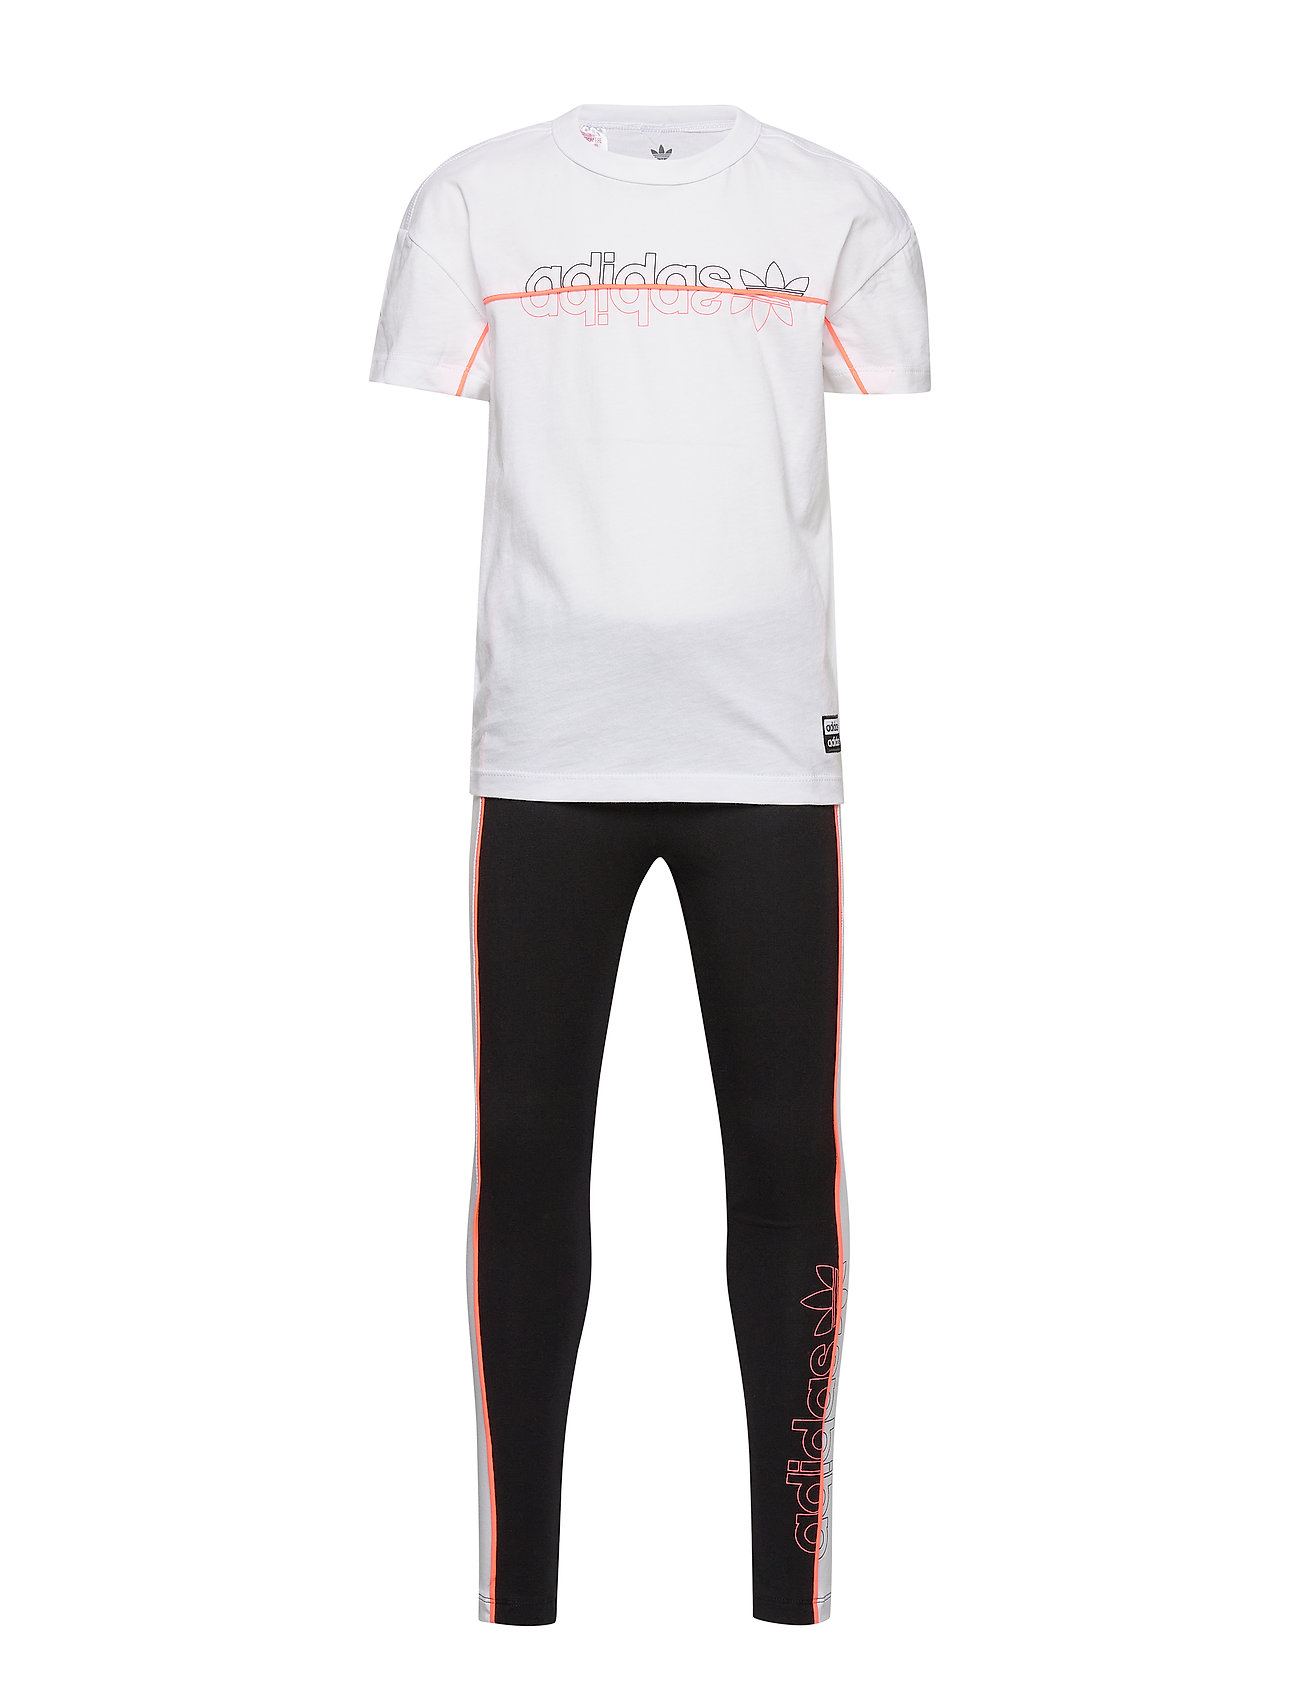 adidas shirt and leggings set